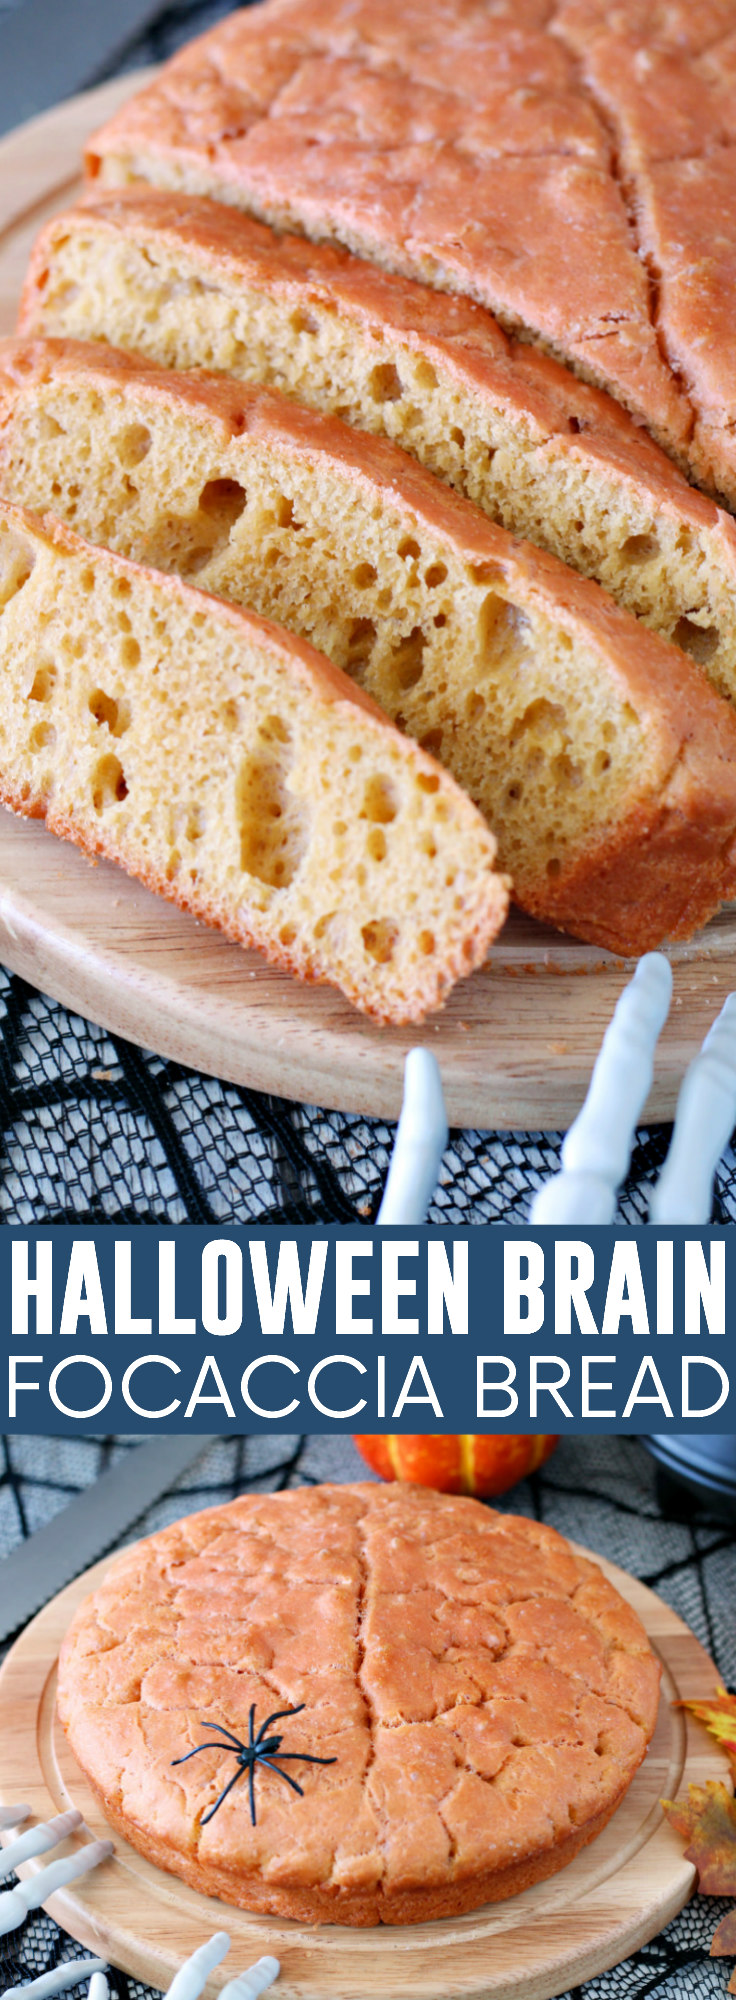 Halloween Brain Focaccia Bread pinnable image.